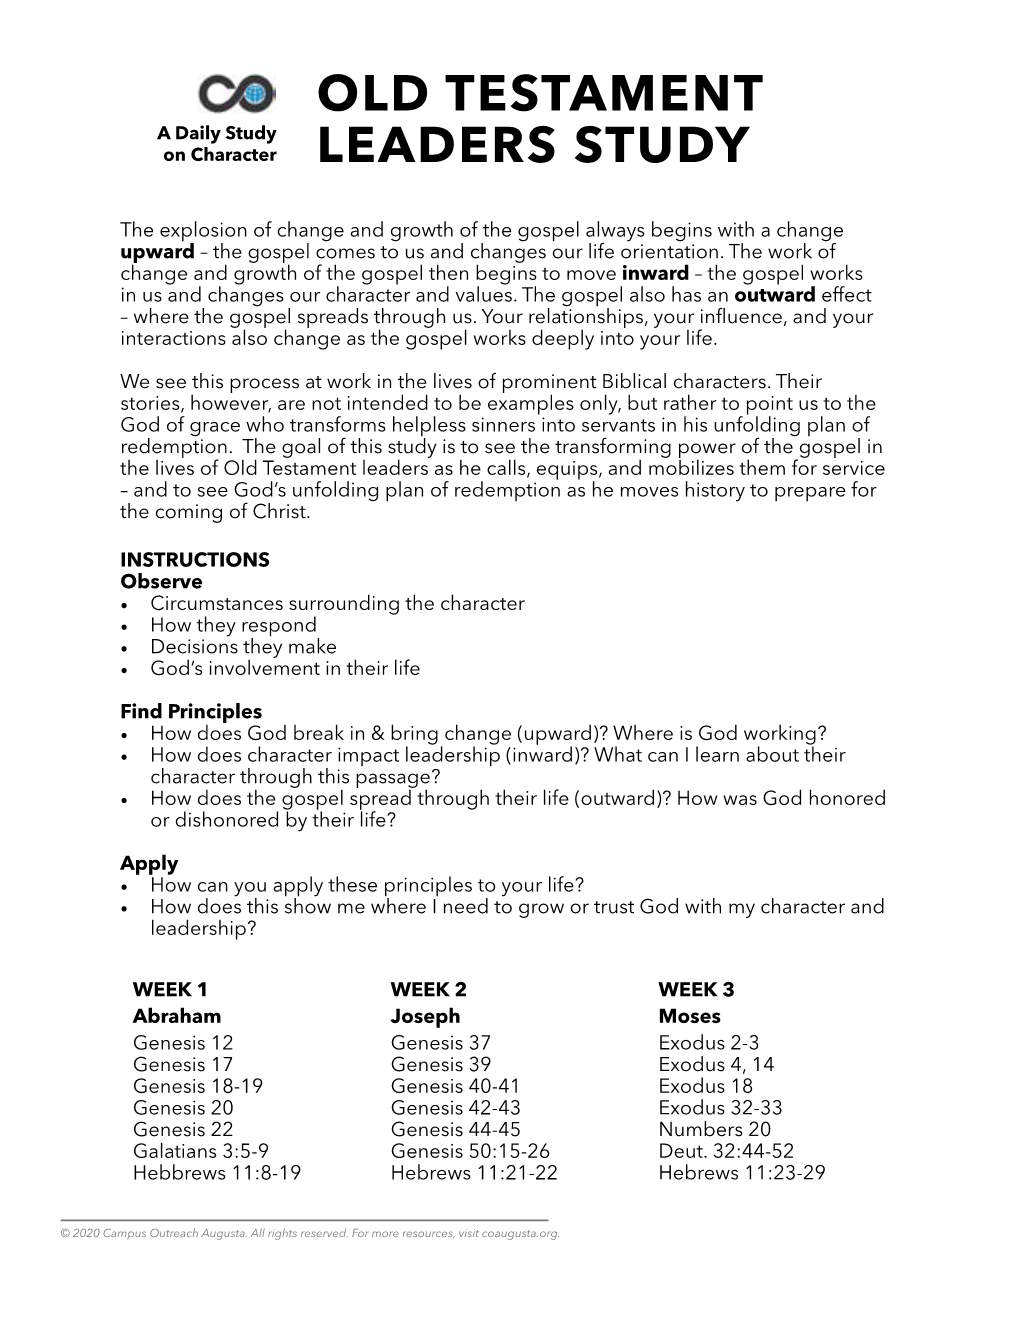 Old Testament Leaders Study